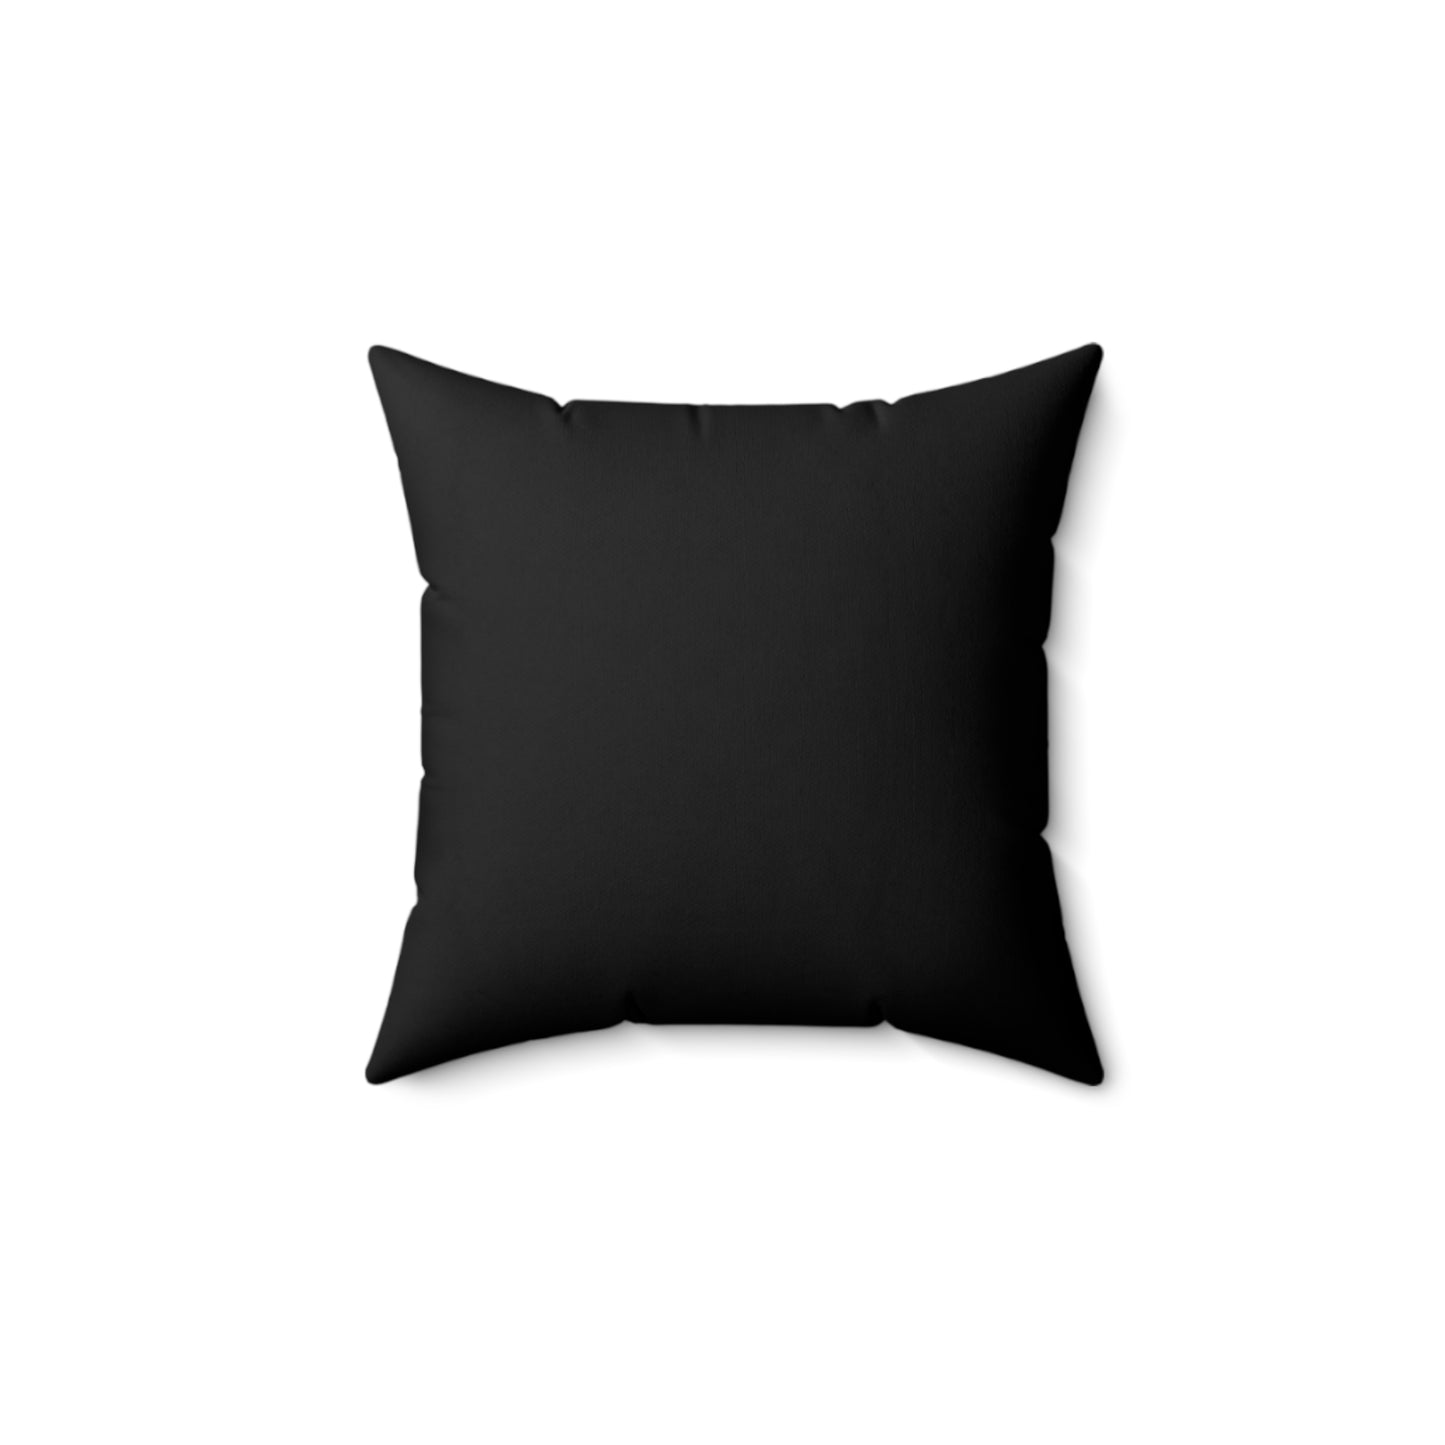 Nevermore Spun Polyester Square Pillow